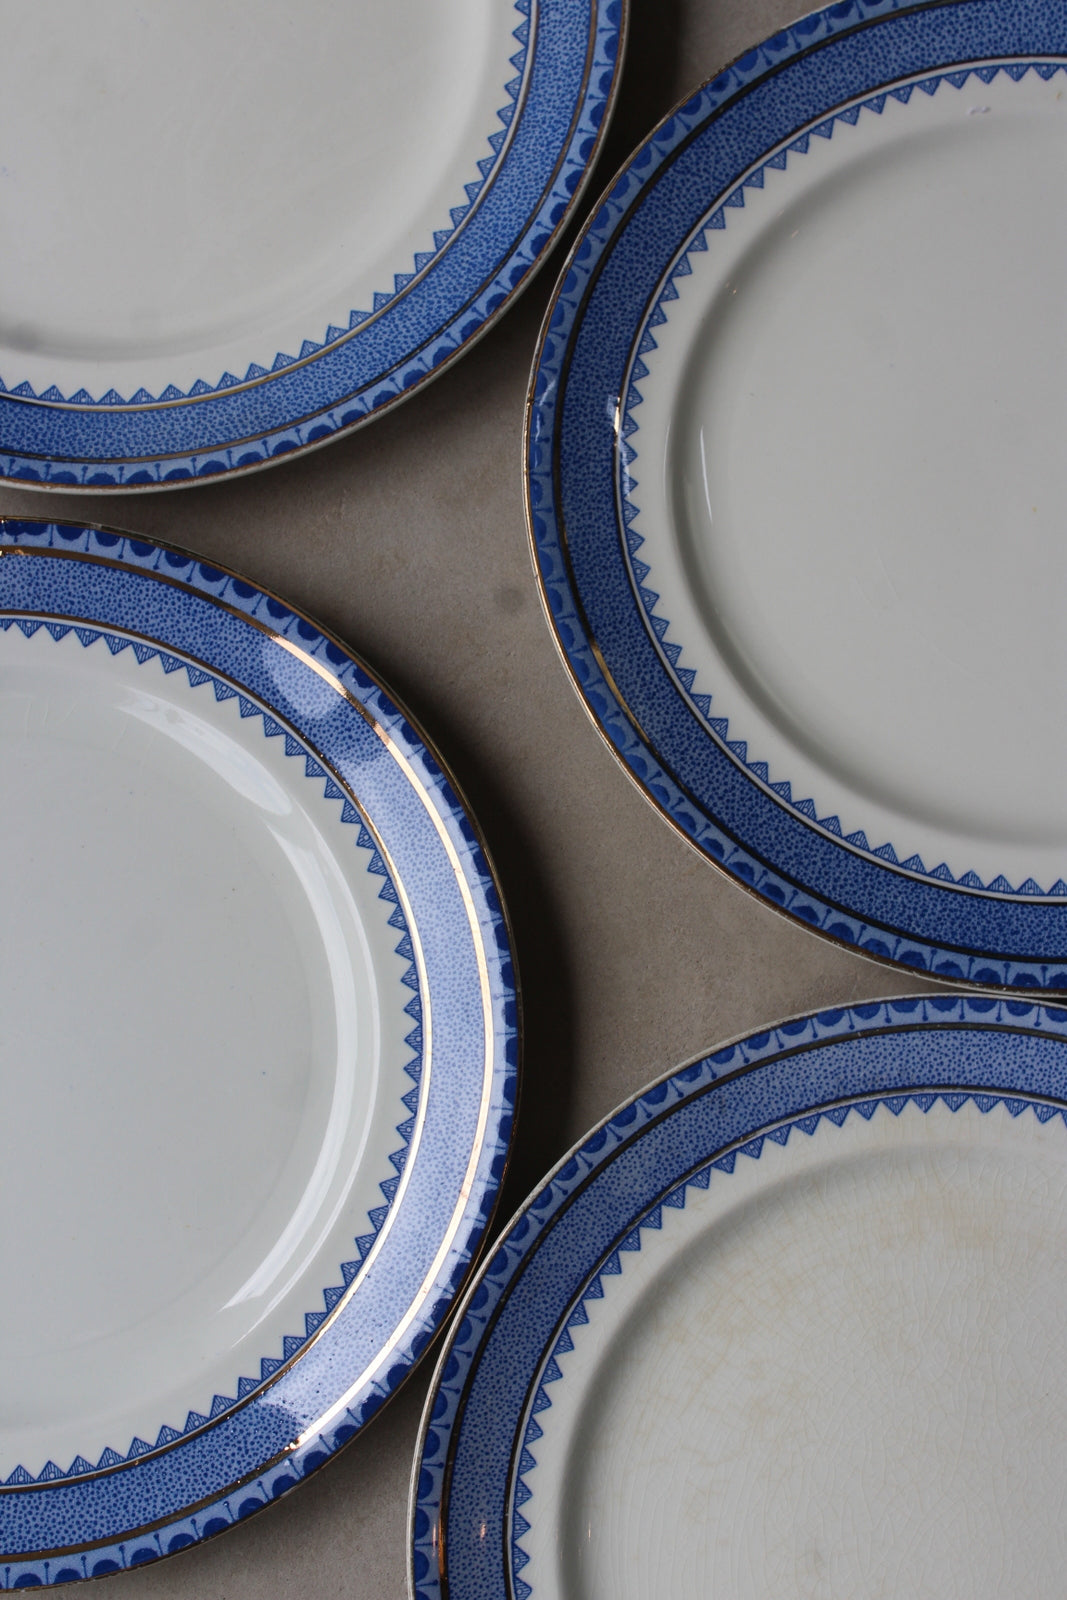 4 Antique Blue & White Breakfast Plates - Kernow Furniture